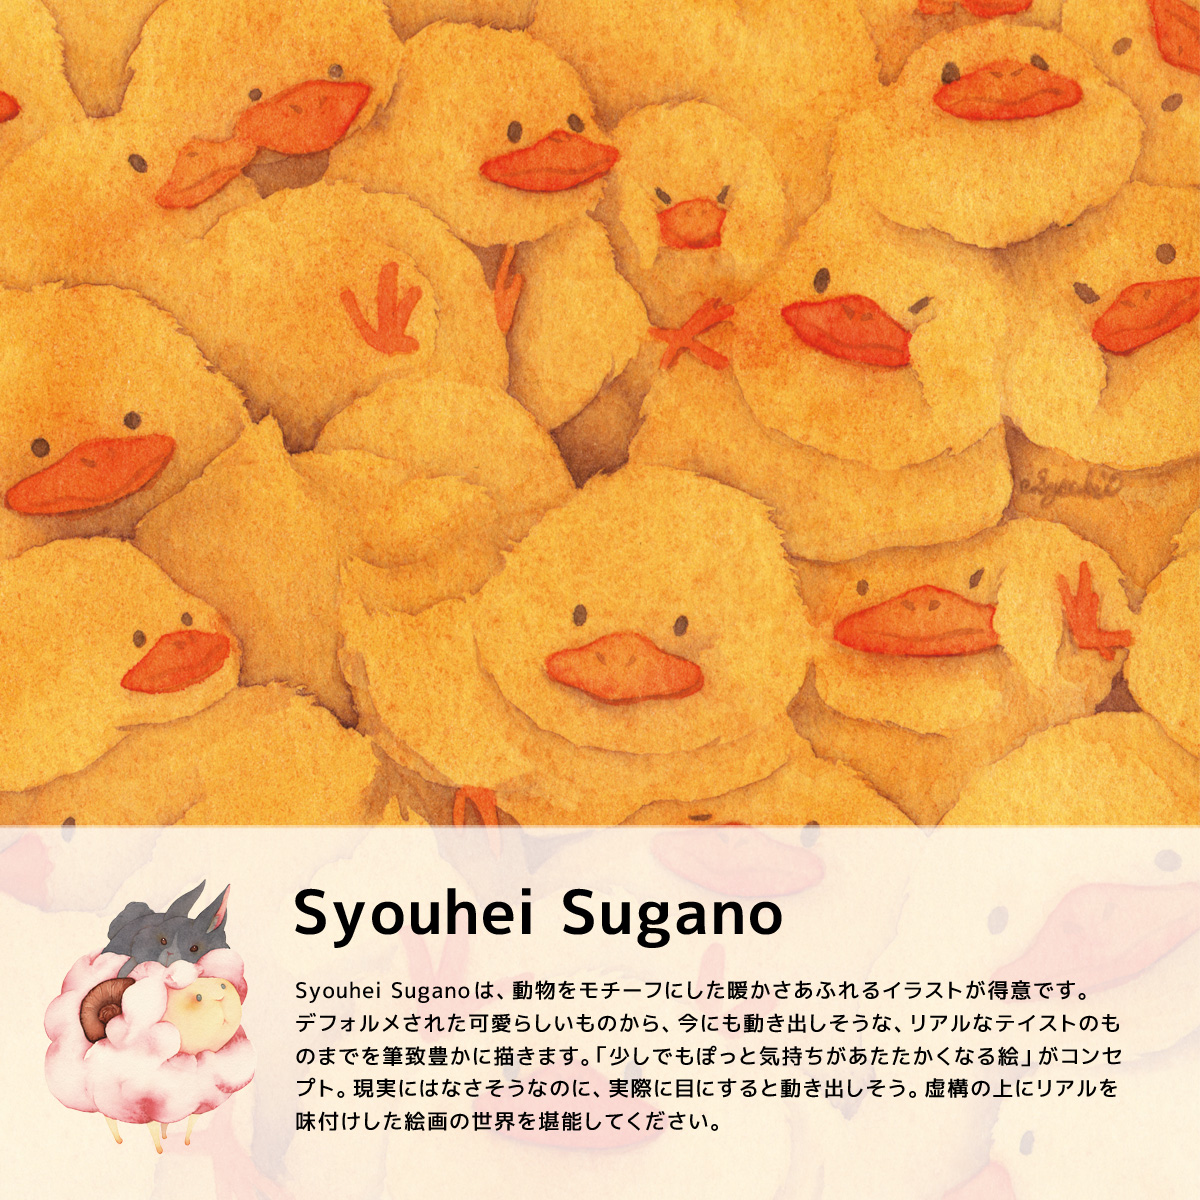 「Syouhei Sugano」　すがのしょうへいデザインのブランド